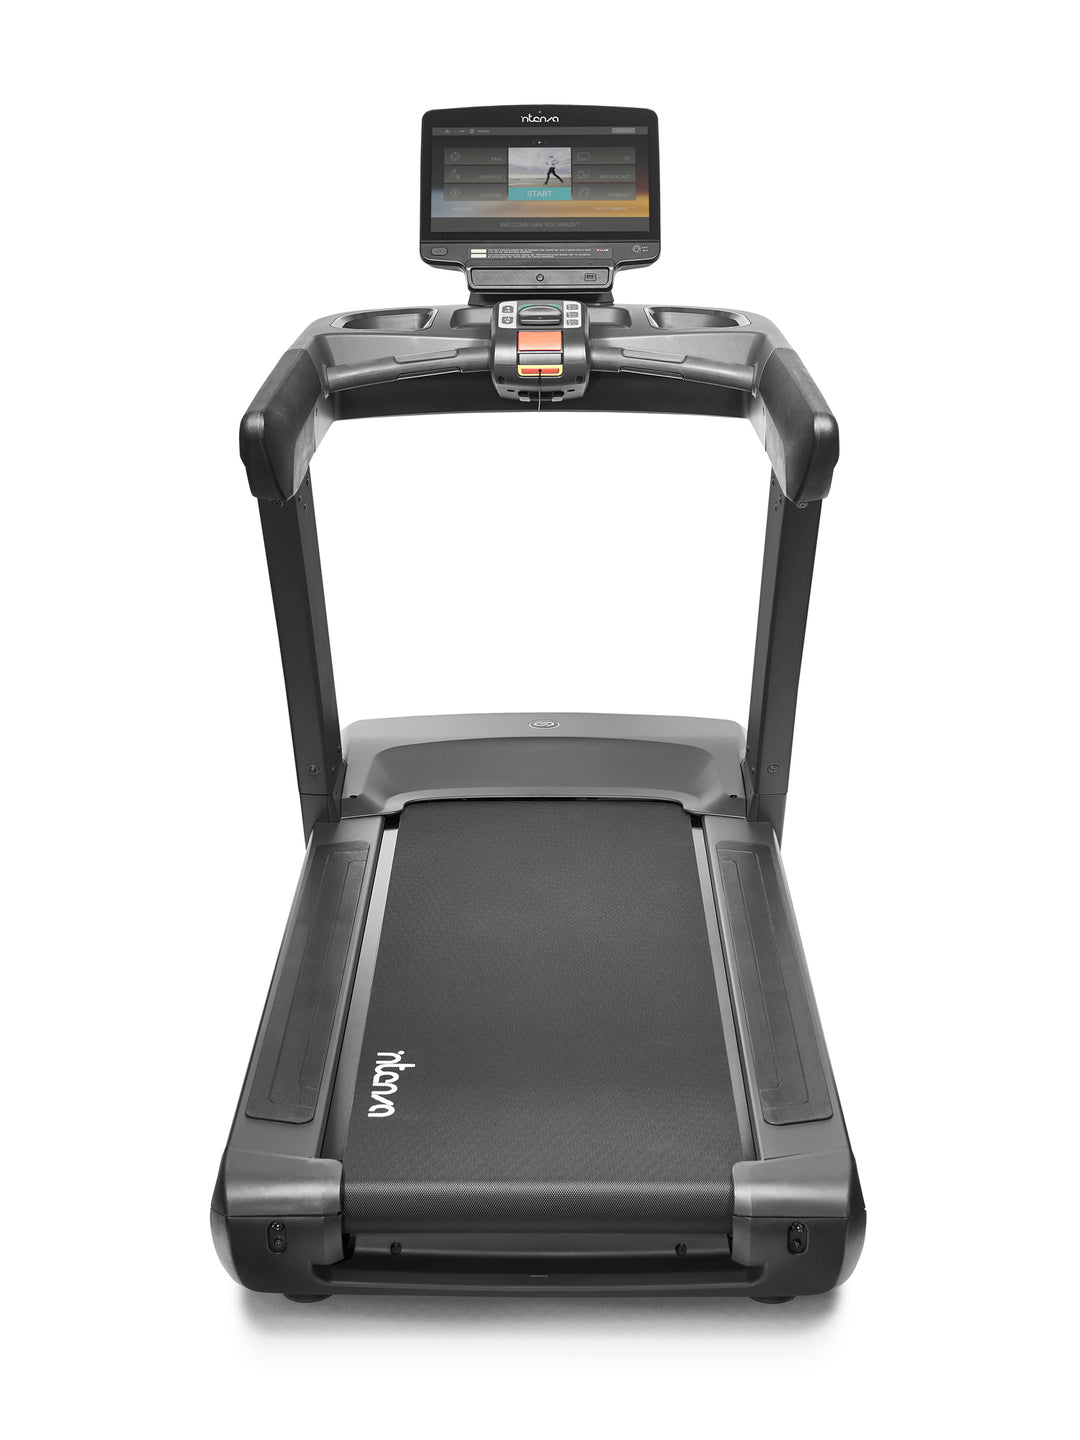 550 e2+ 跑步機 Treadmill